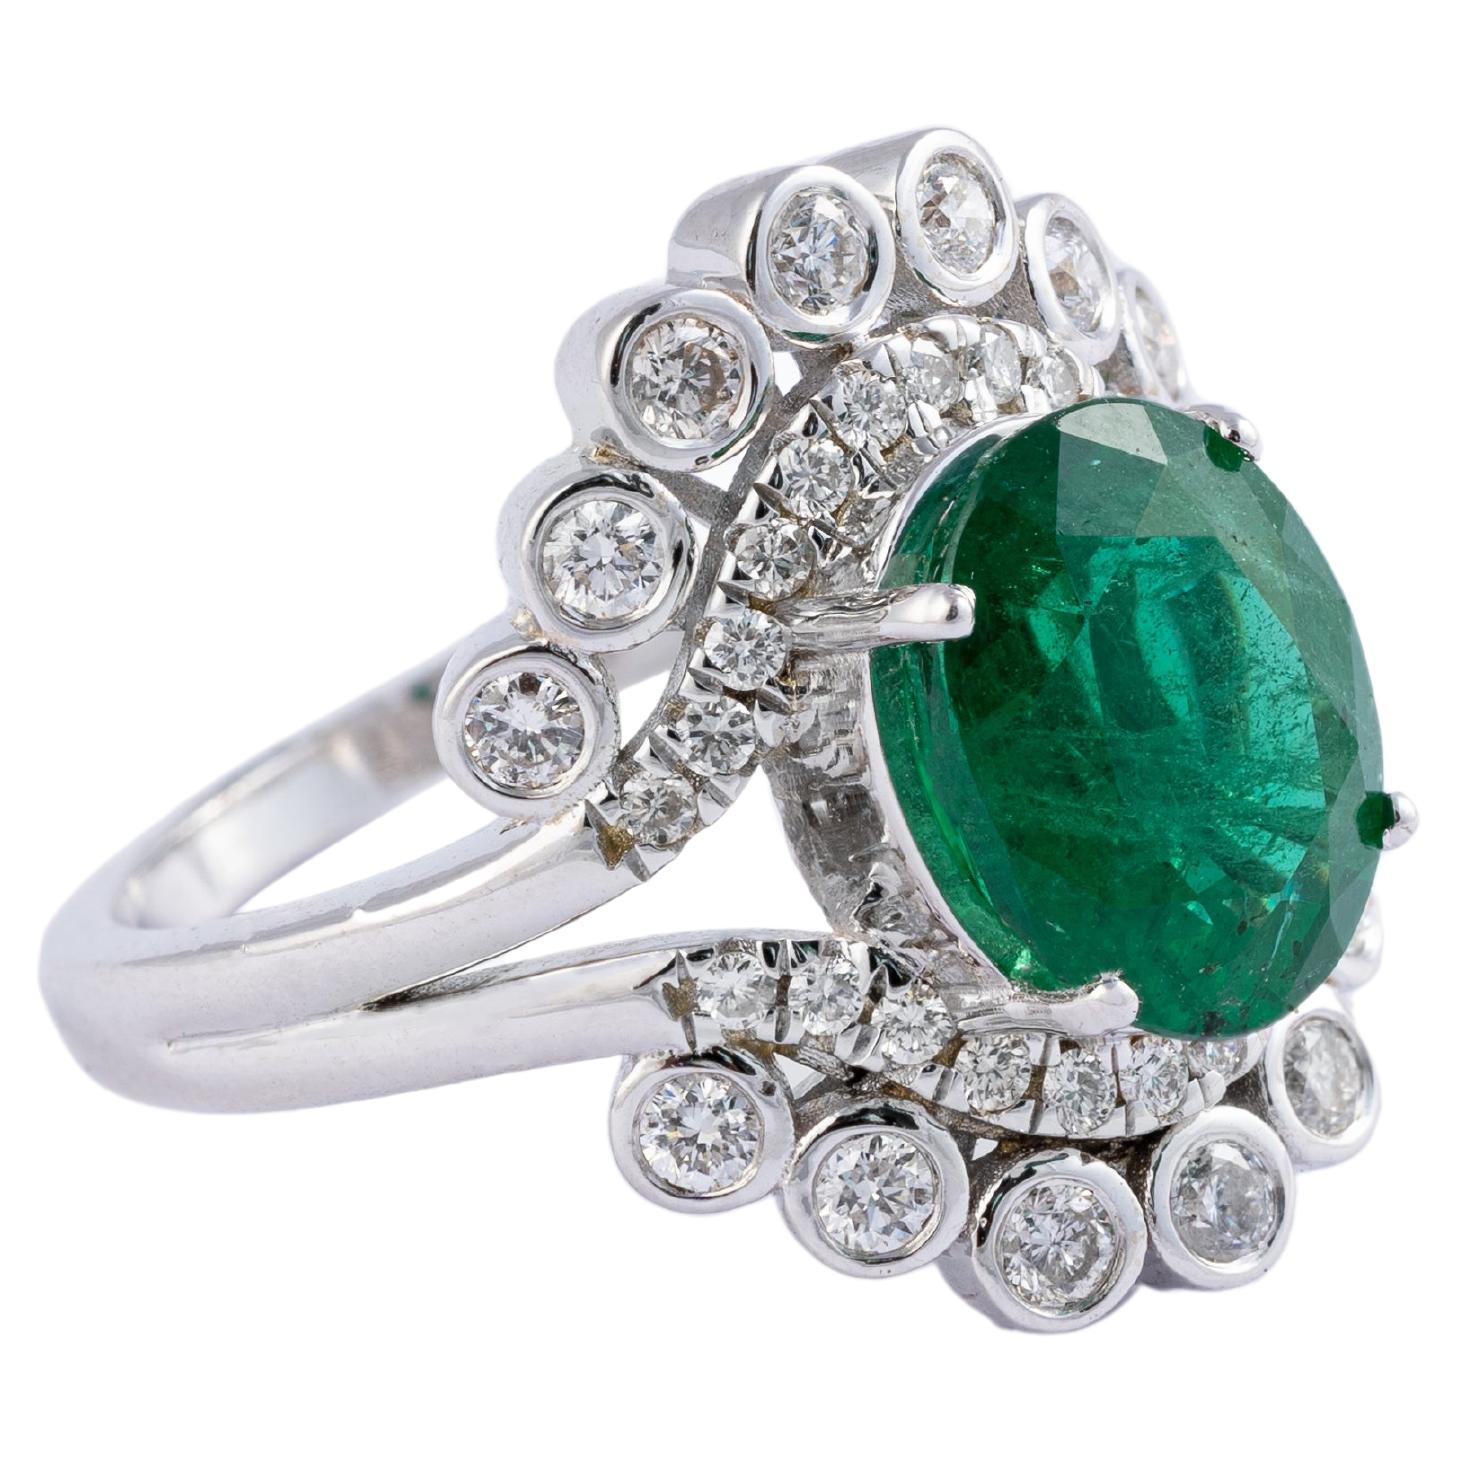 2.96 carats Natural Zambian Emerald Ring with Diamonds 0.65 carats  and 14k Gold